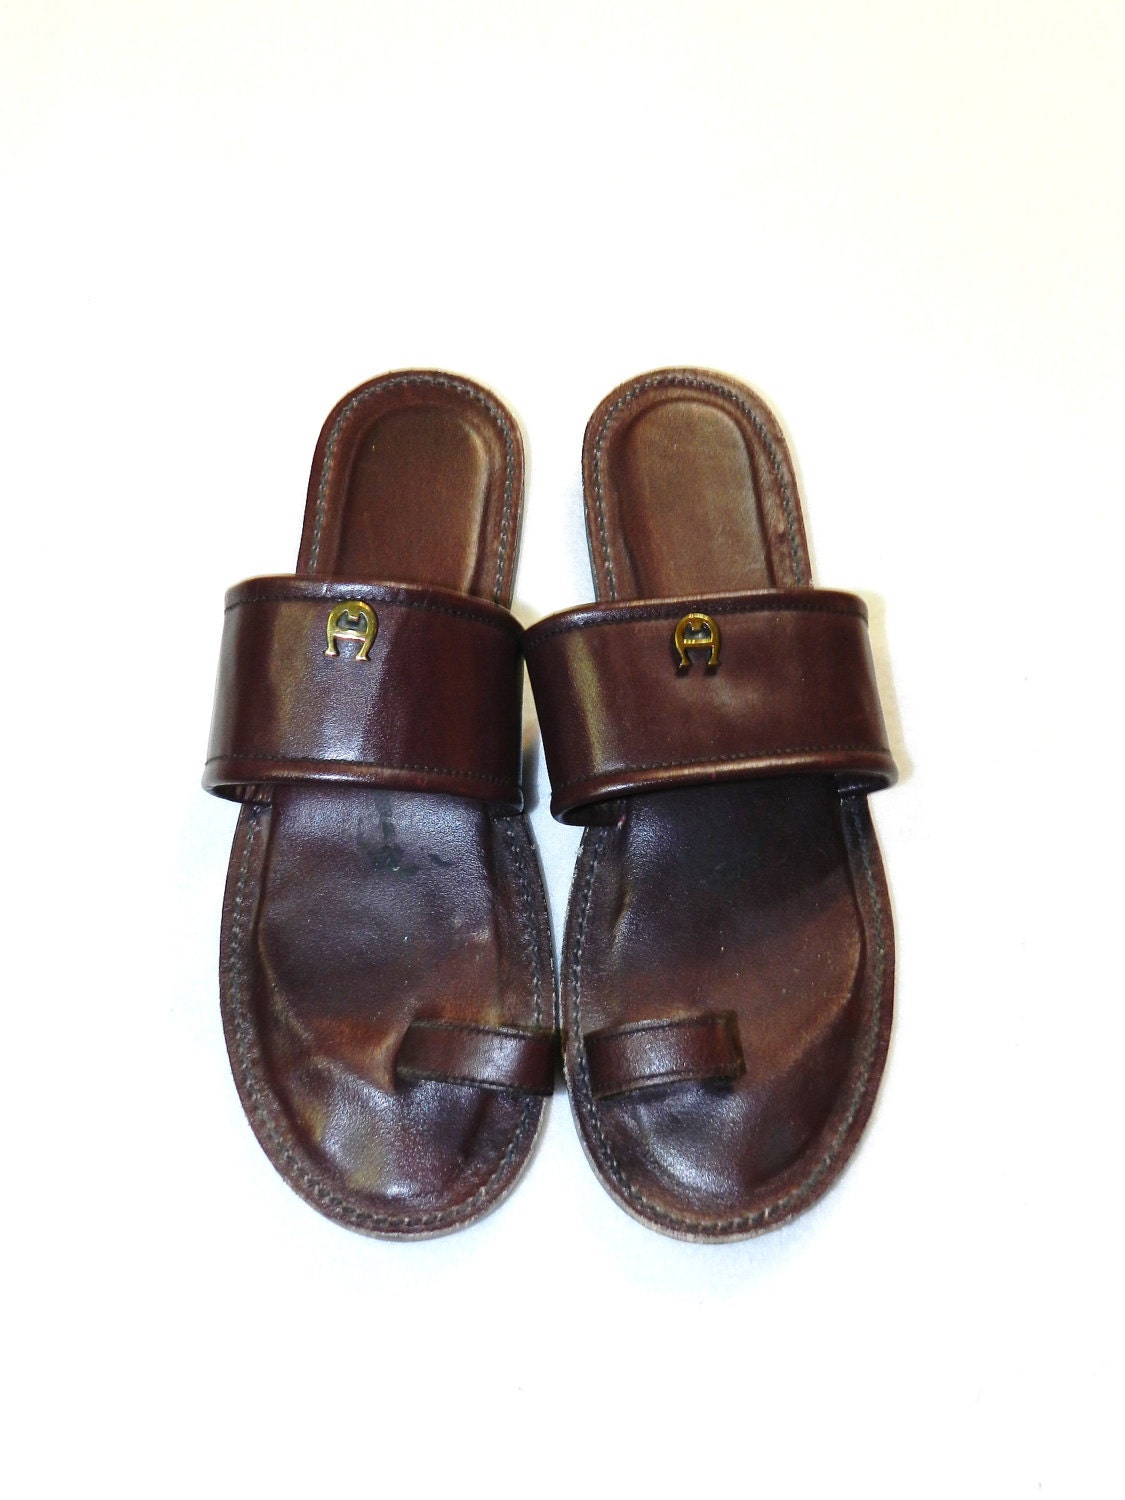 Vintage Leather ETIENNE AIGNER Sandals Size by FerryTaleTreasures